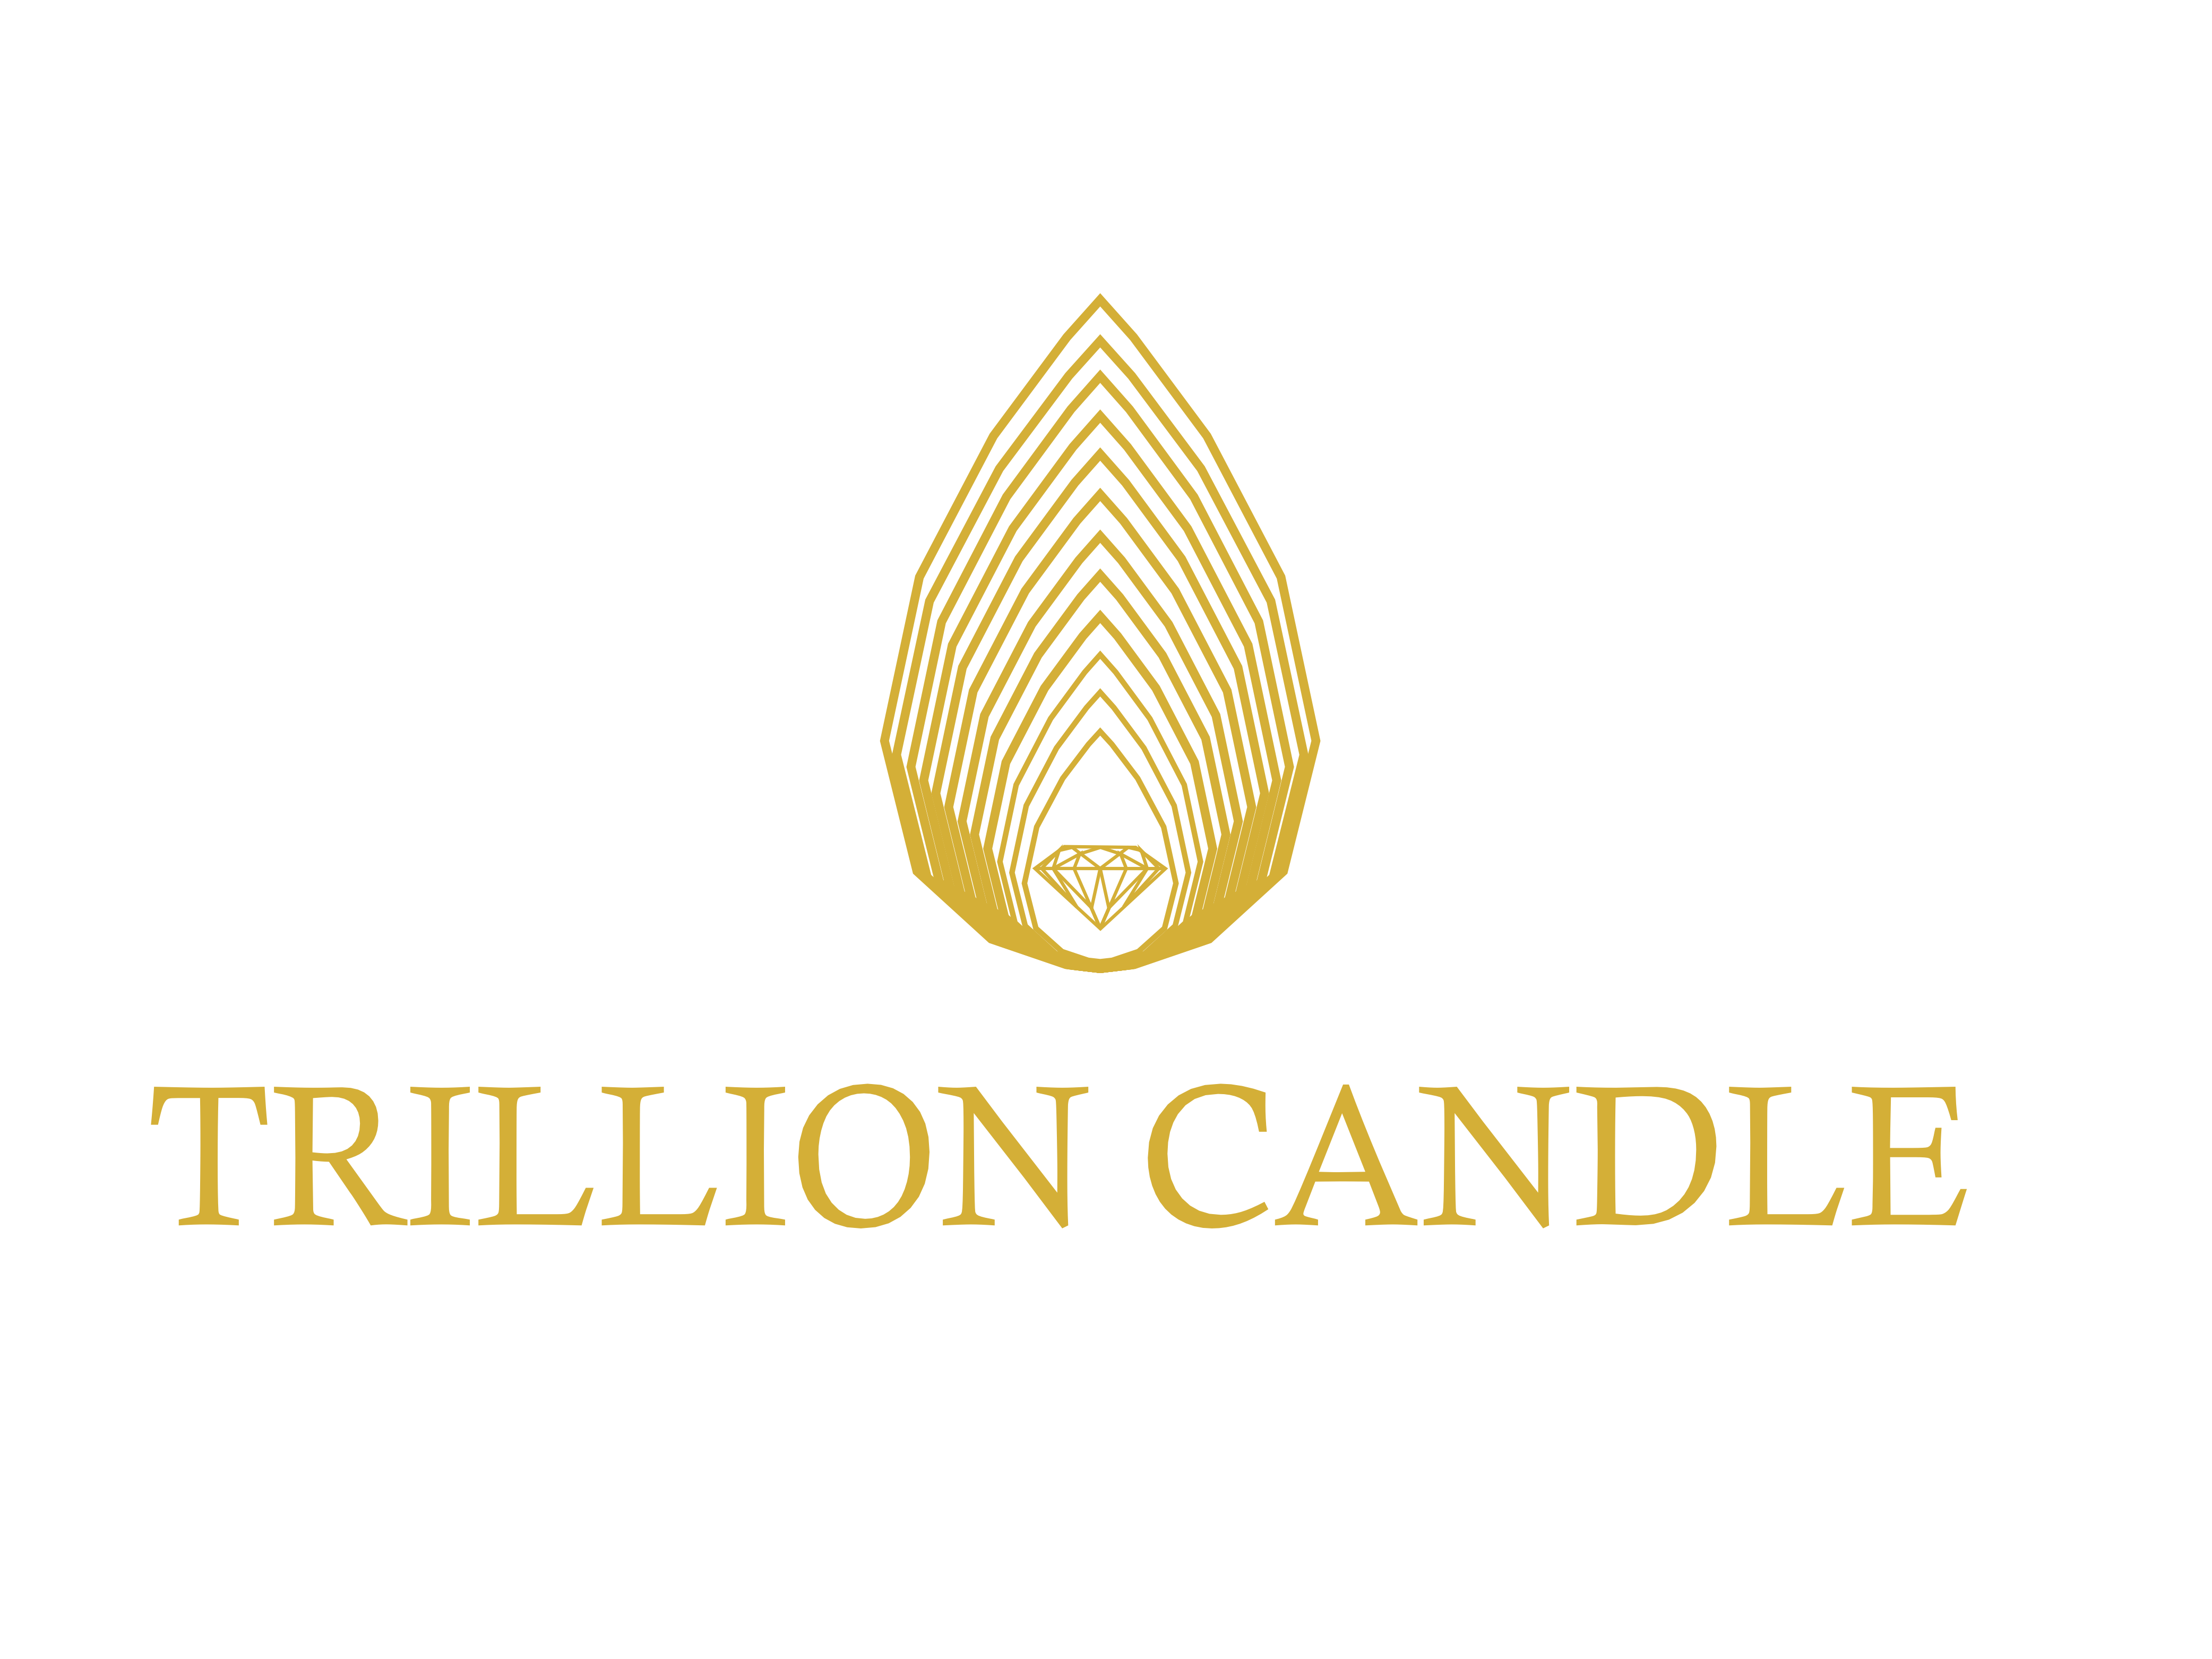 Trillion Candle